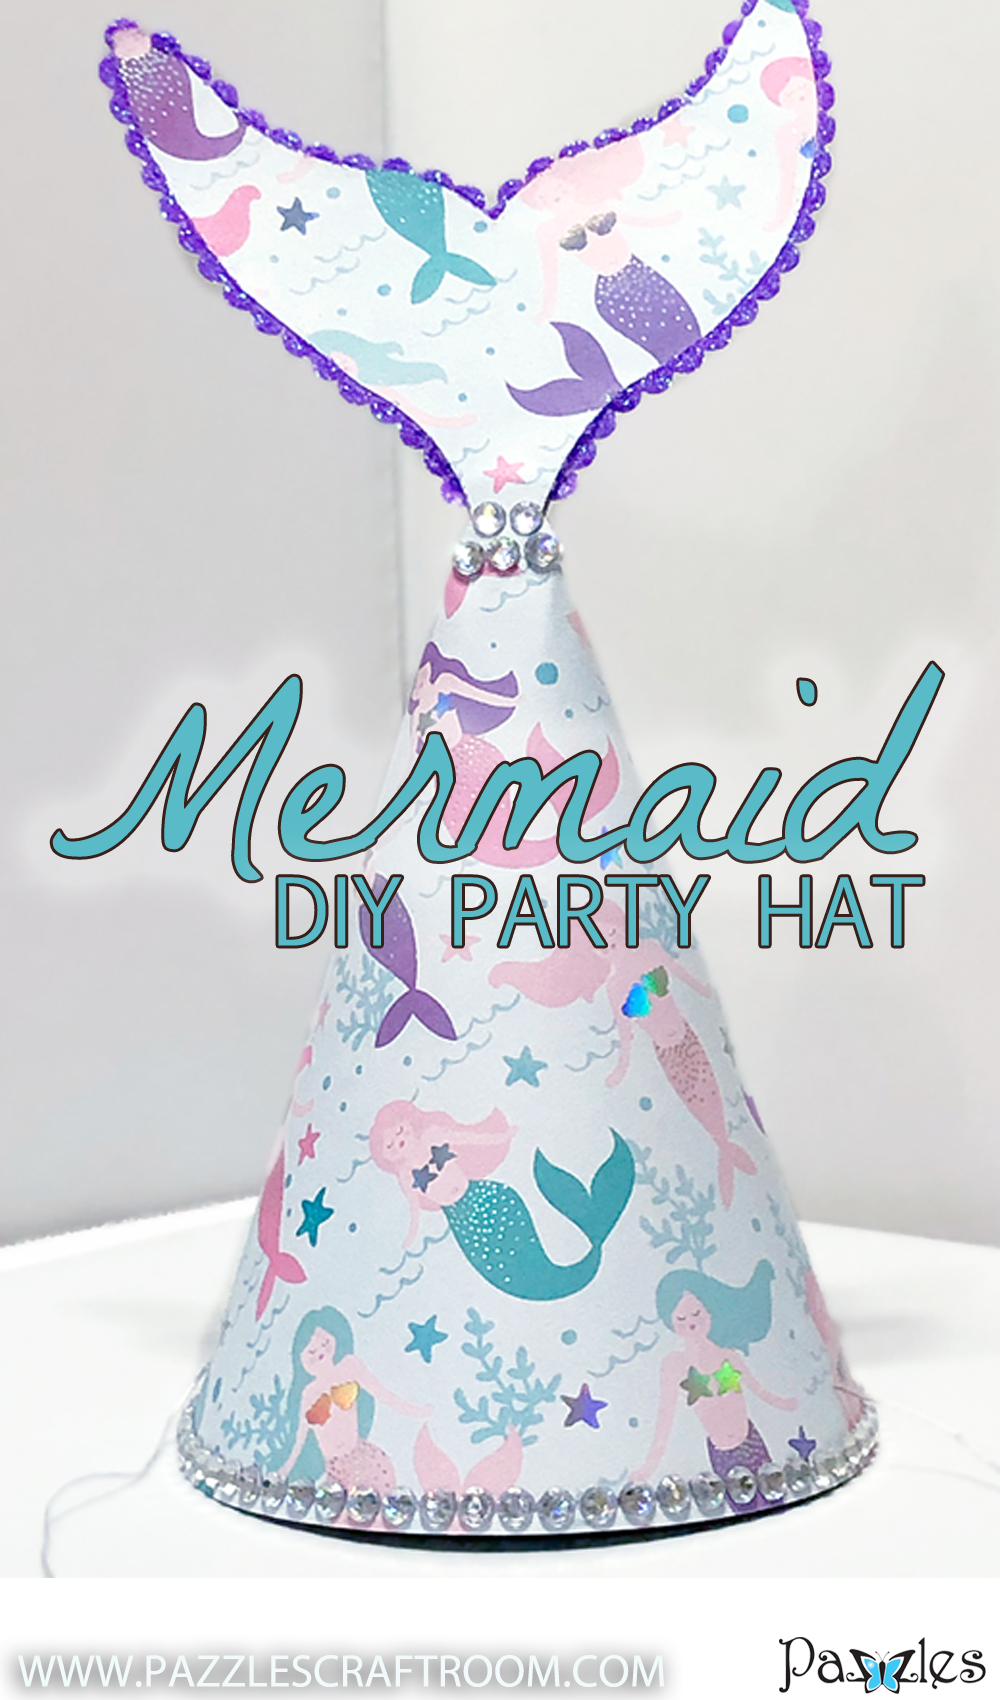 Pazzles DIY Mermaid Party Hat by Lisa Reyna